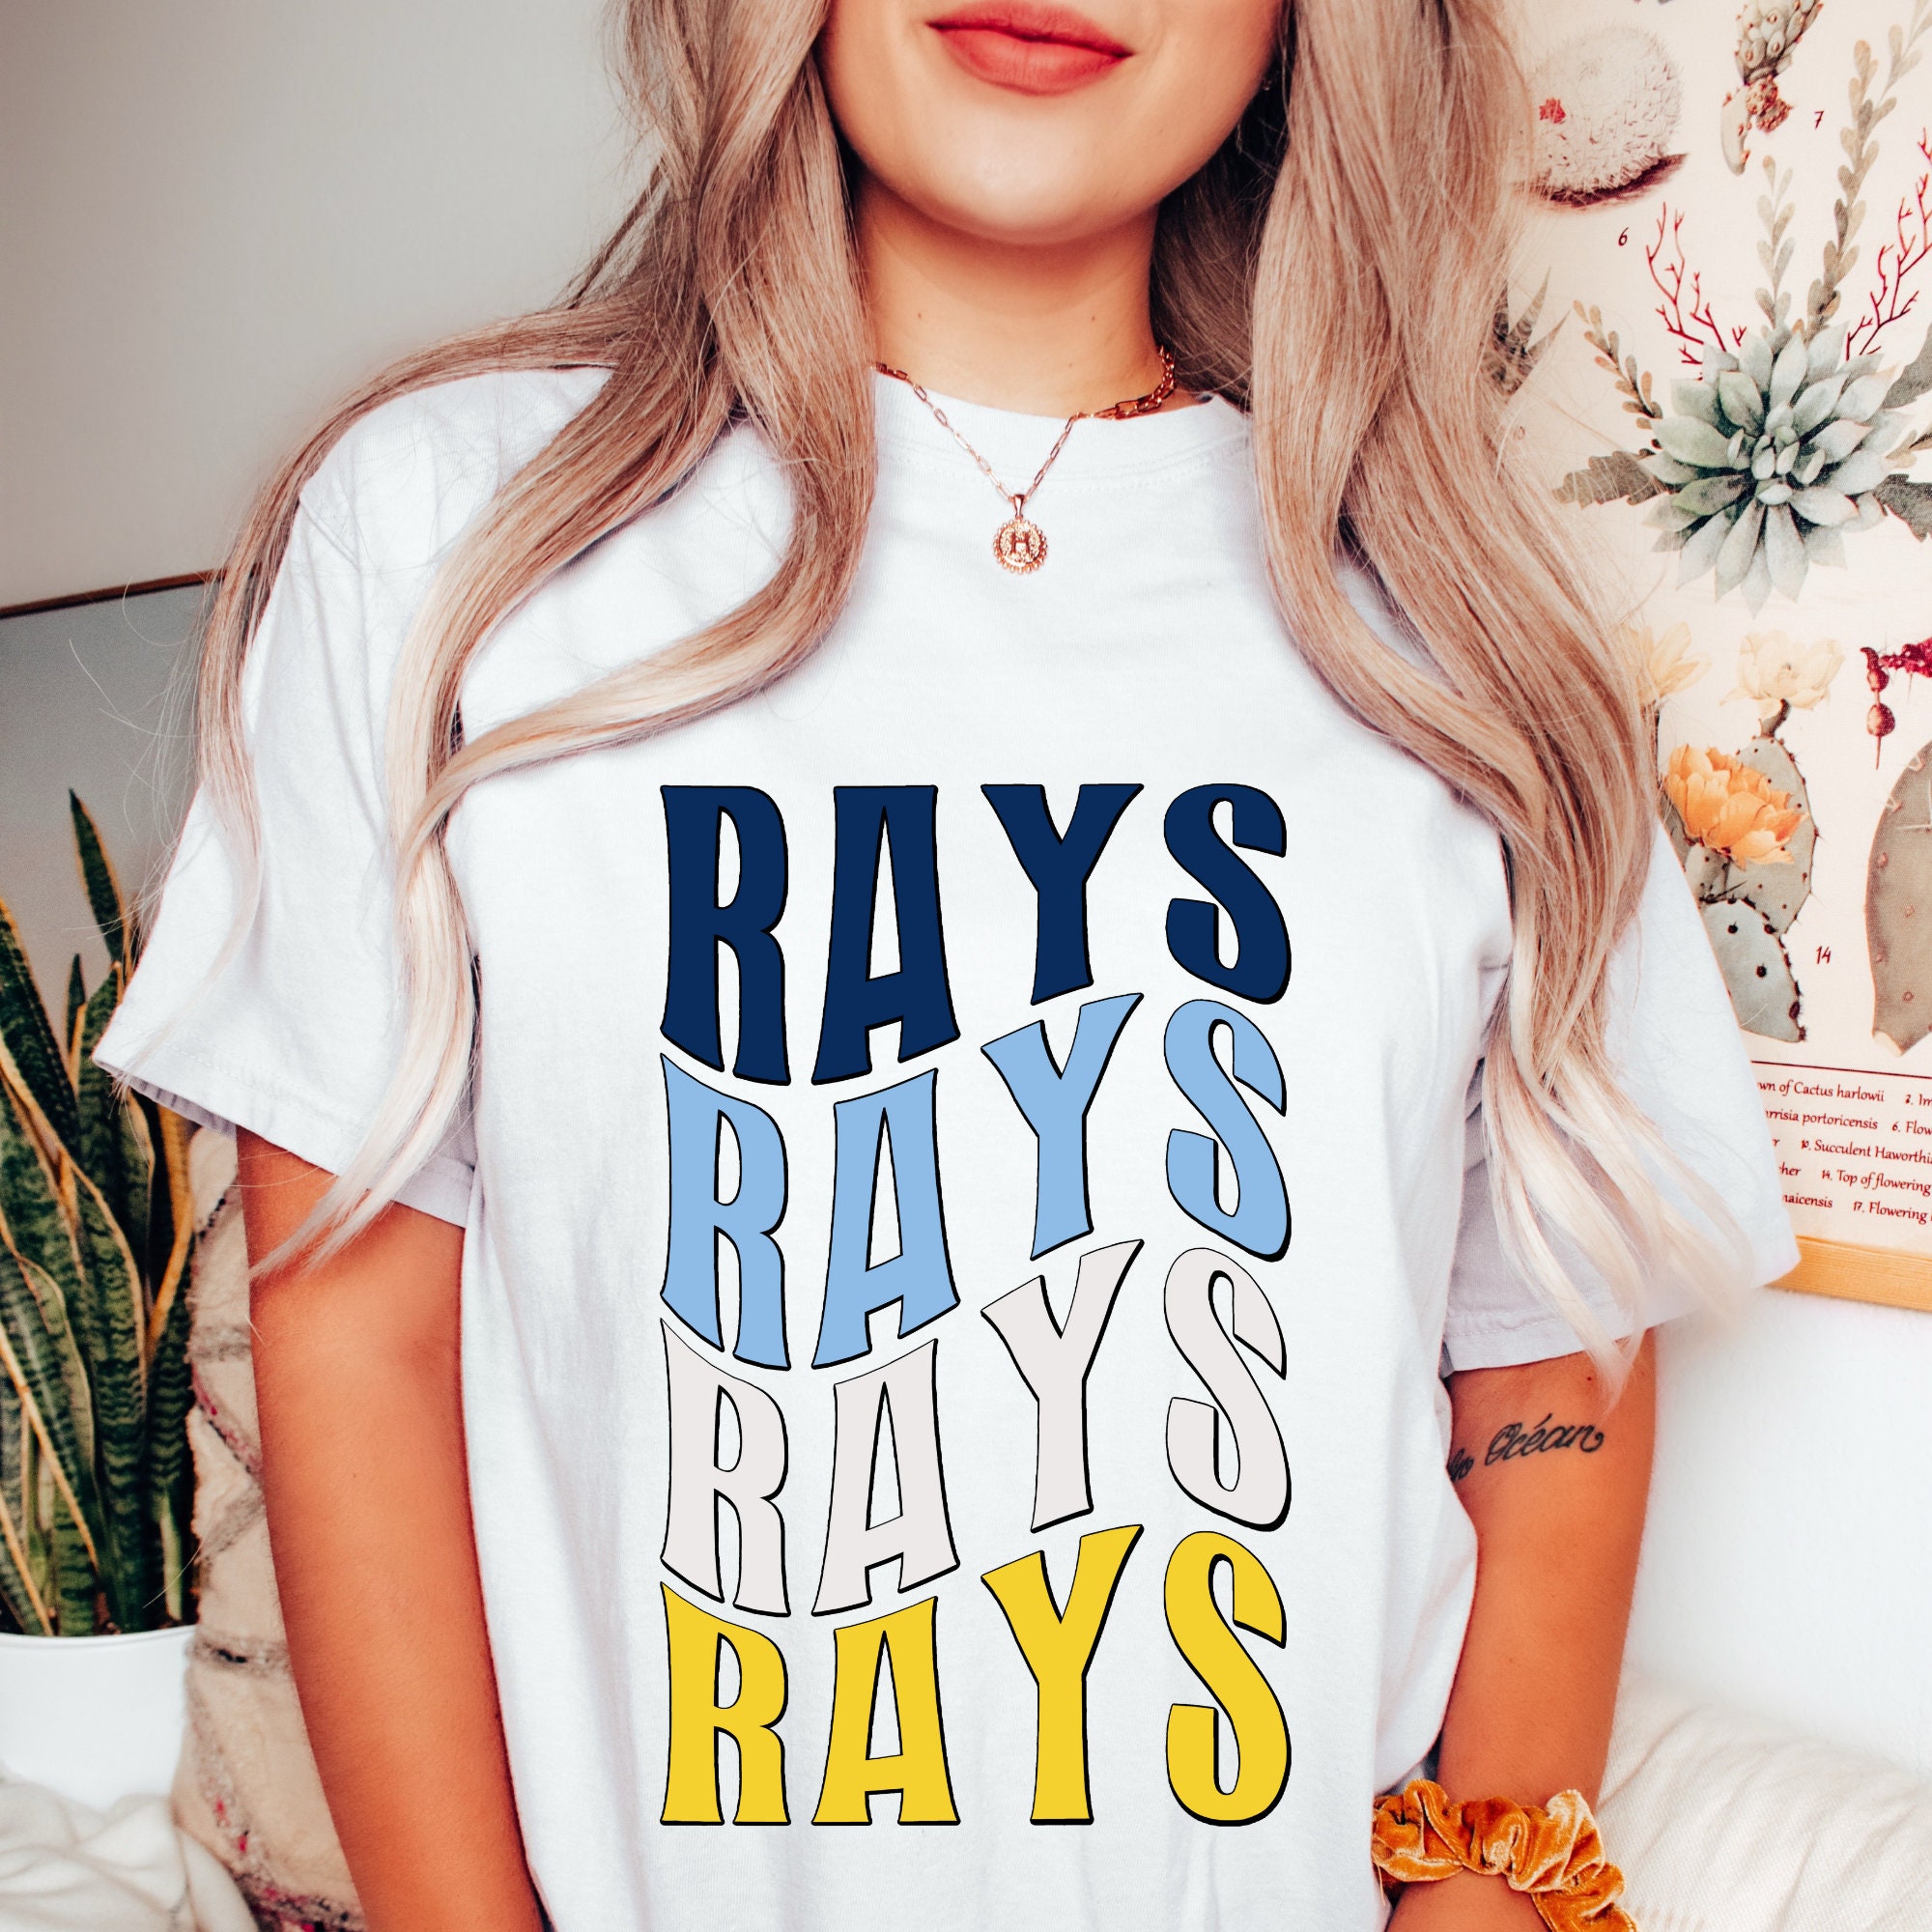 Tampa Bay Rays MLB Majestic Yellow Team Logo Camouflage XL T-Shirt